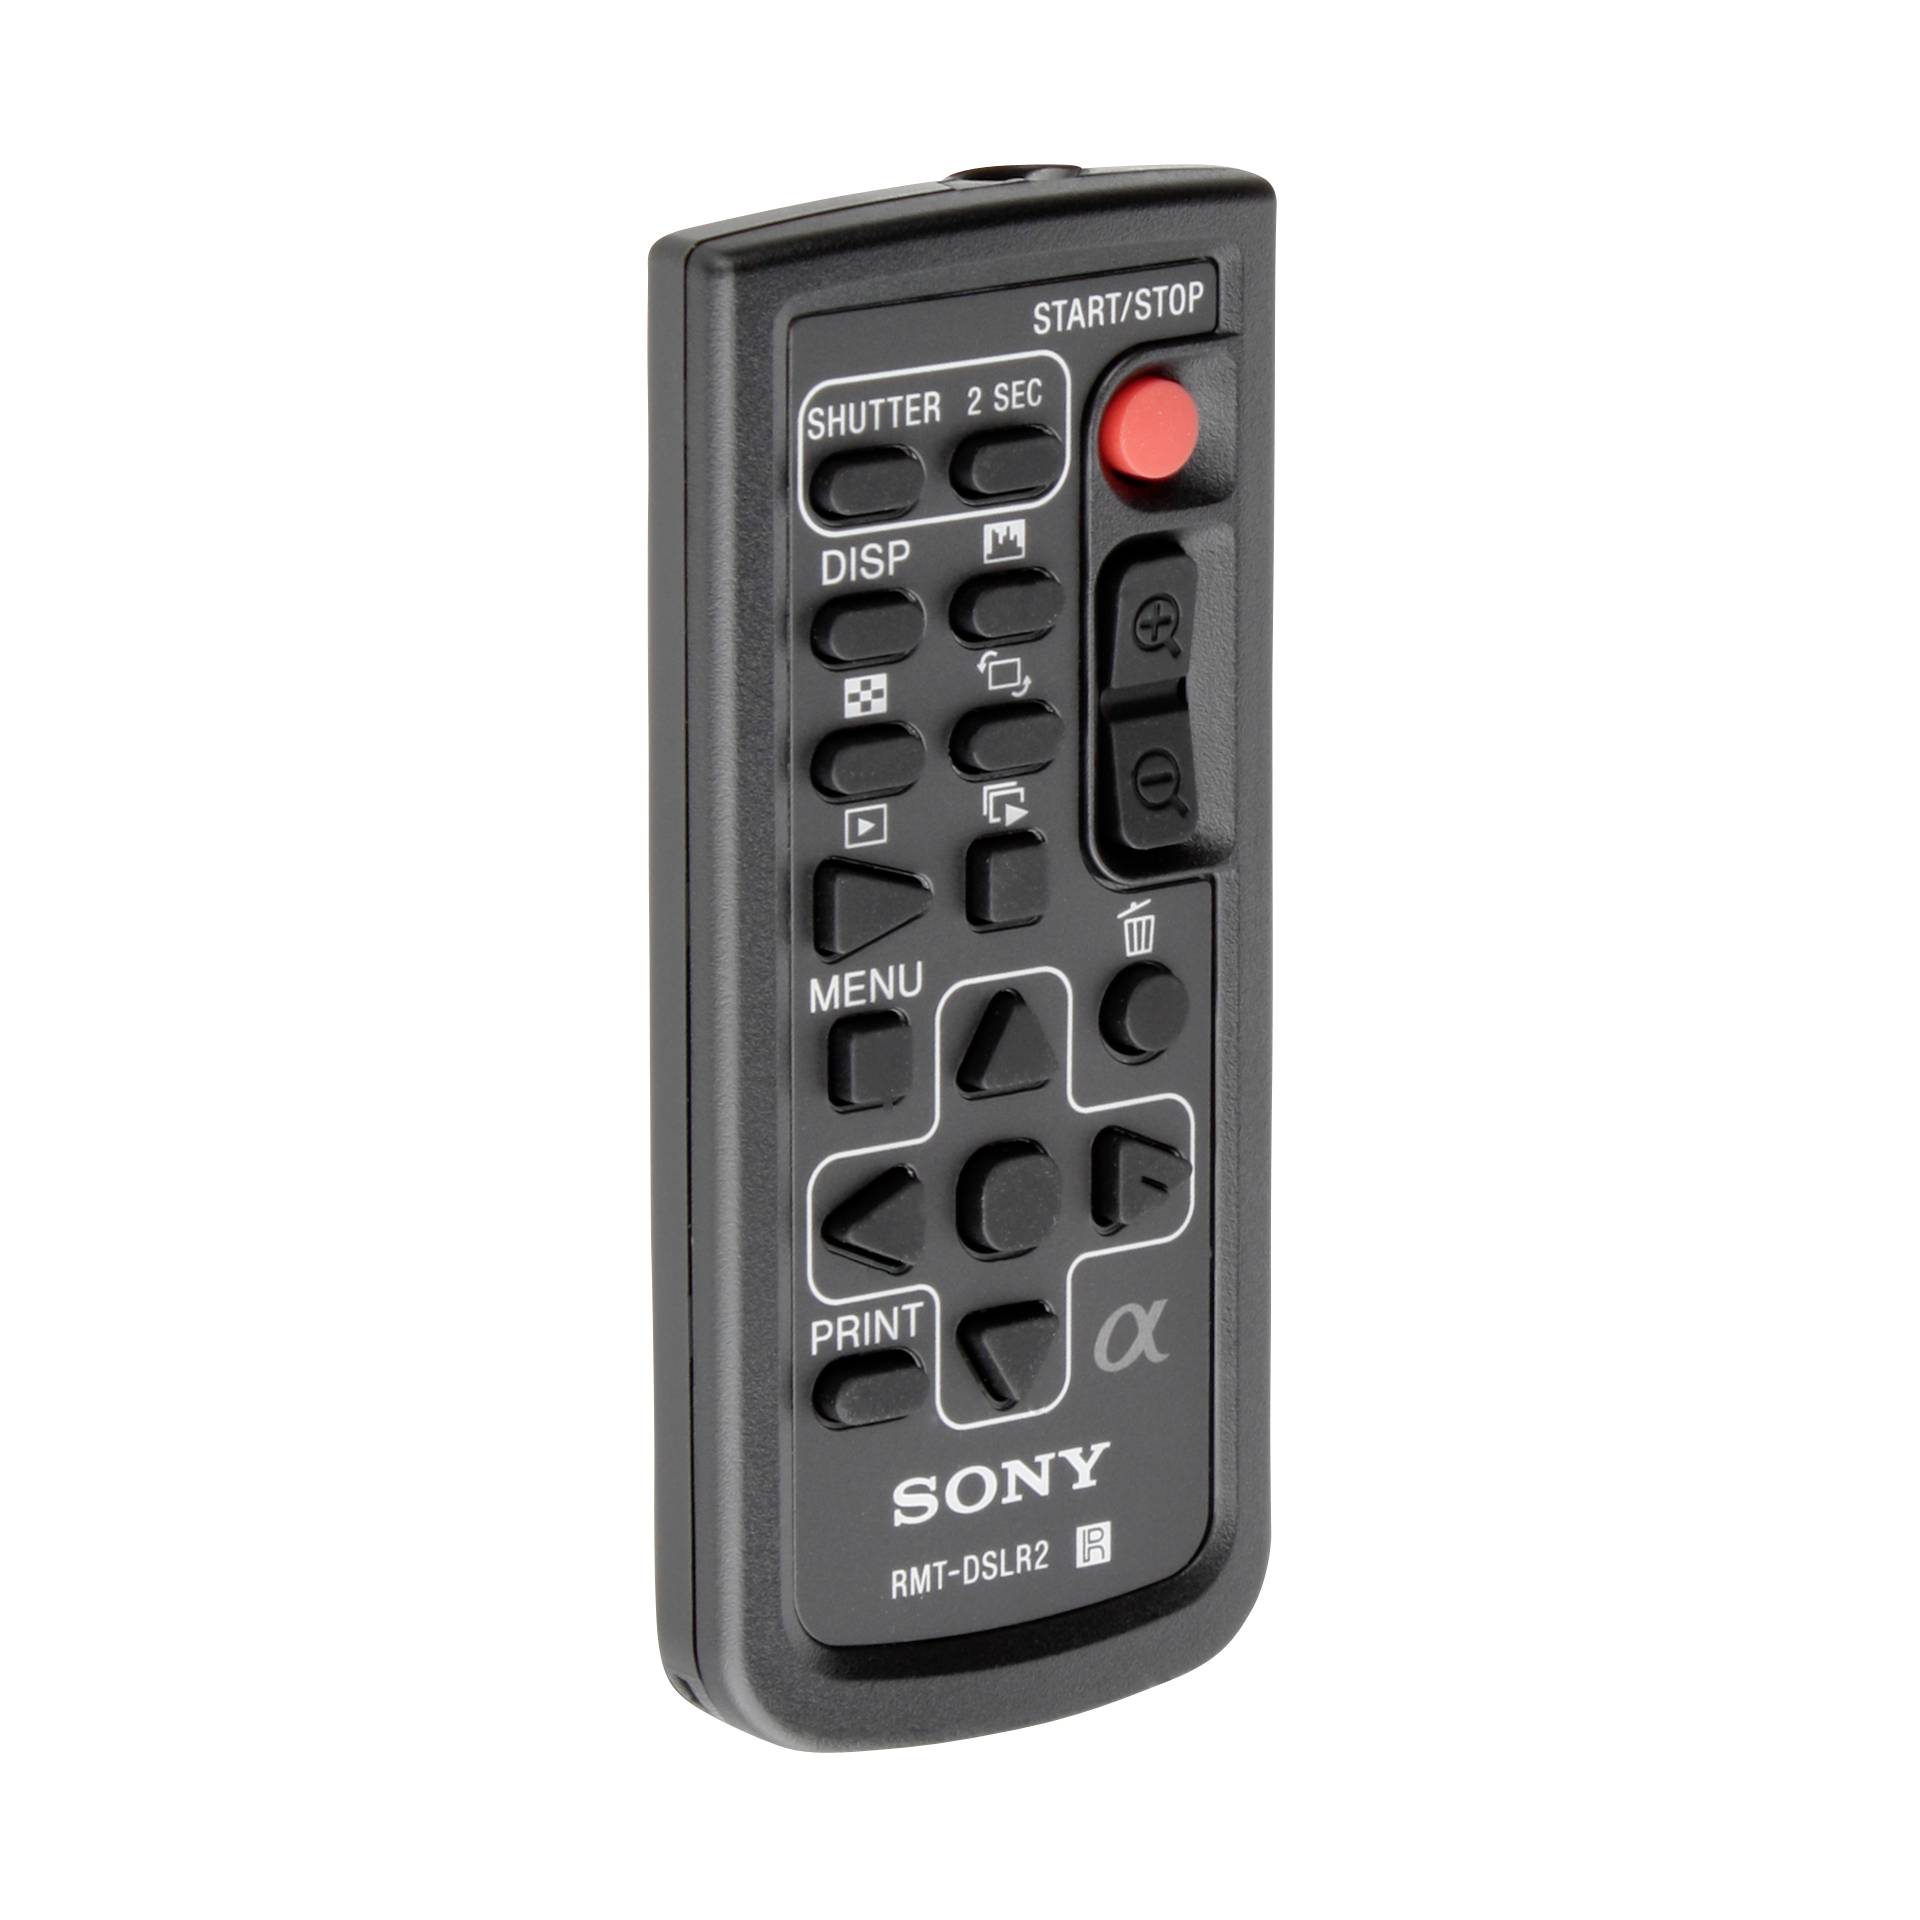 Sony RMT-DSLR2 telecomando wireless